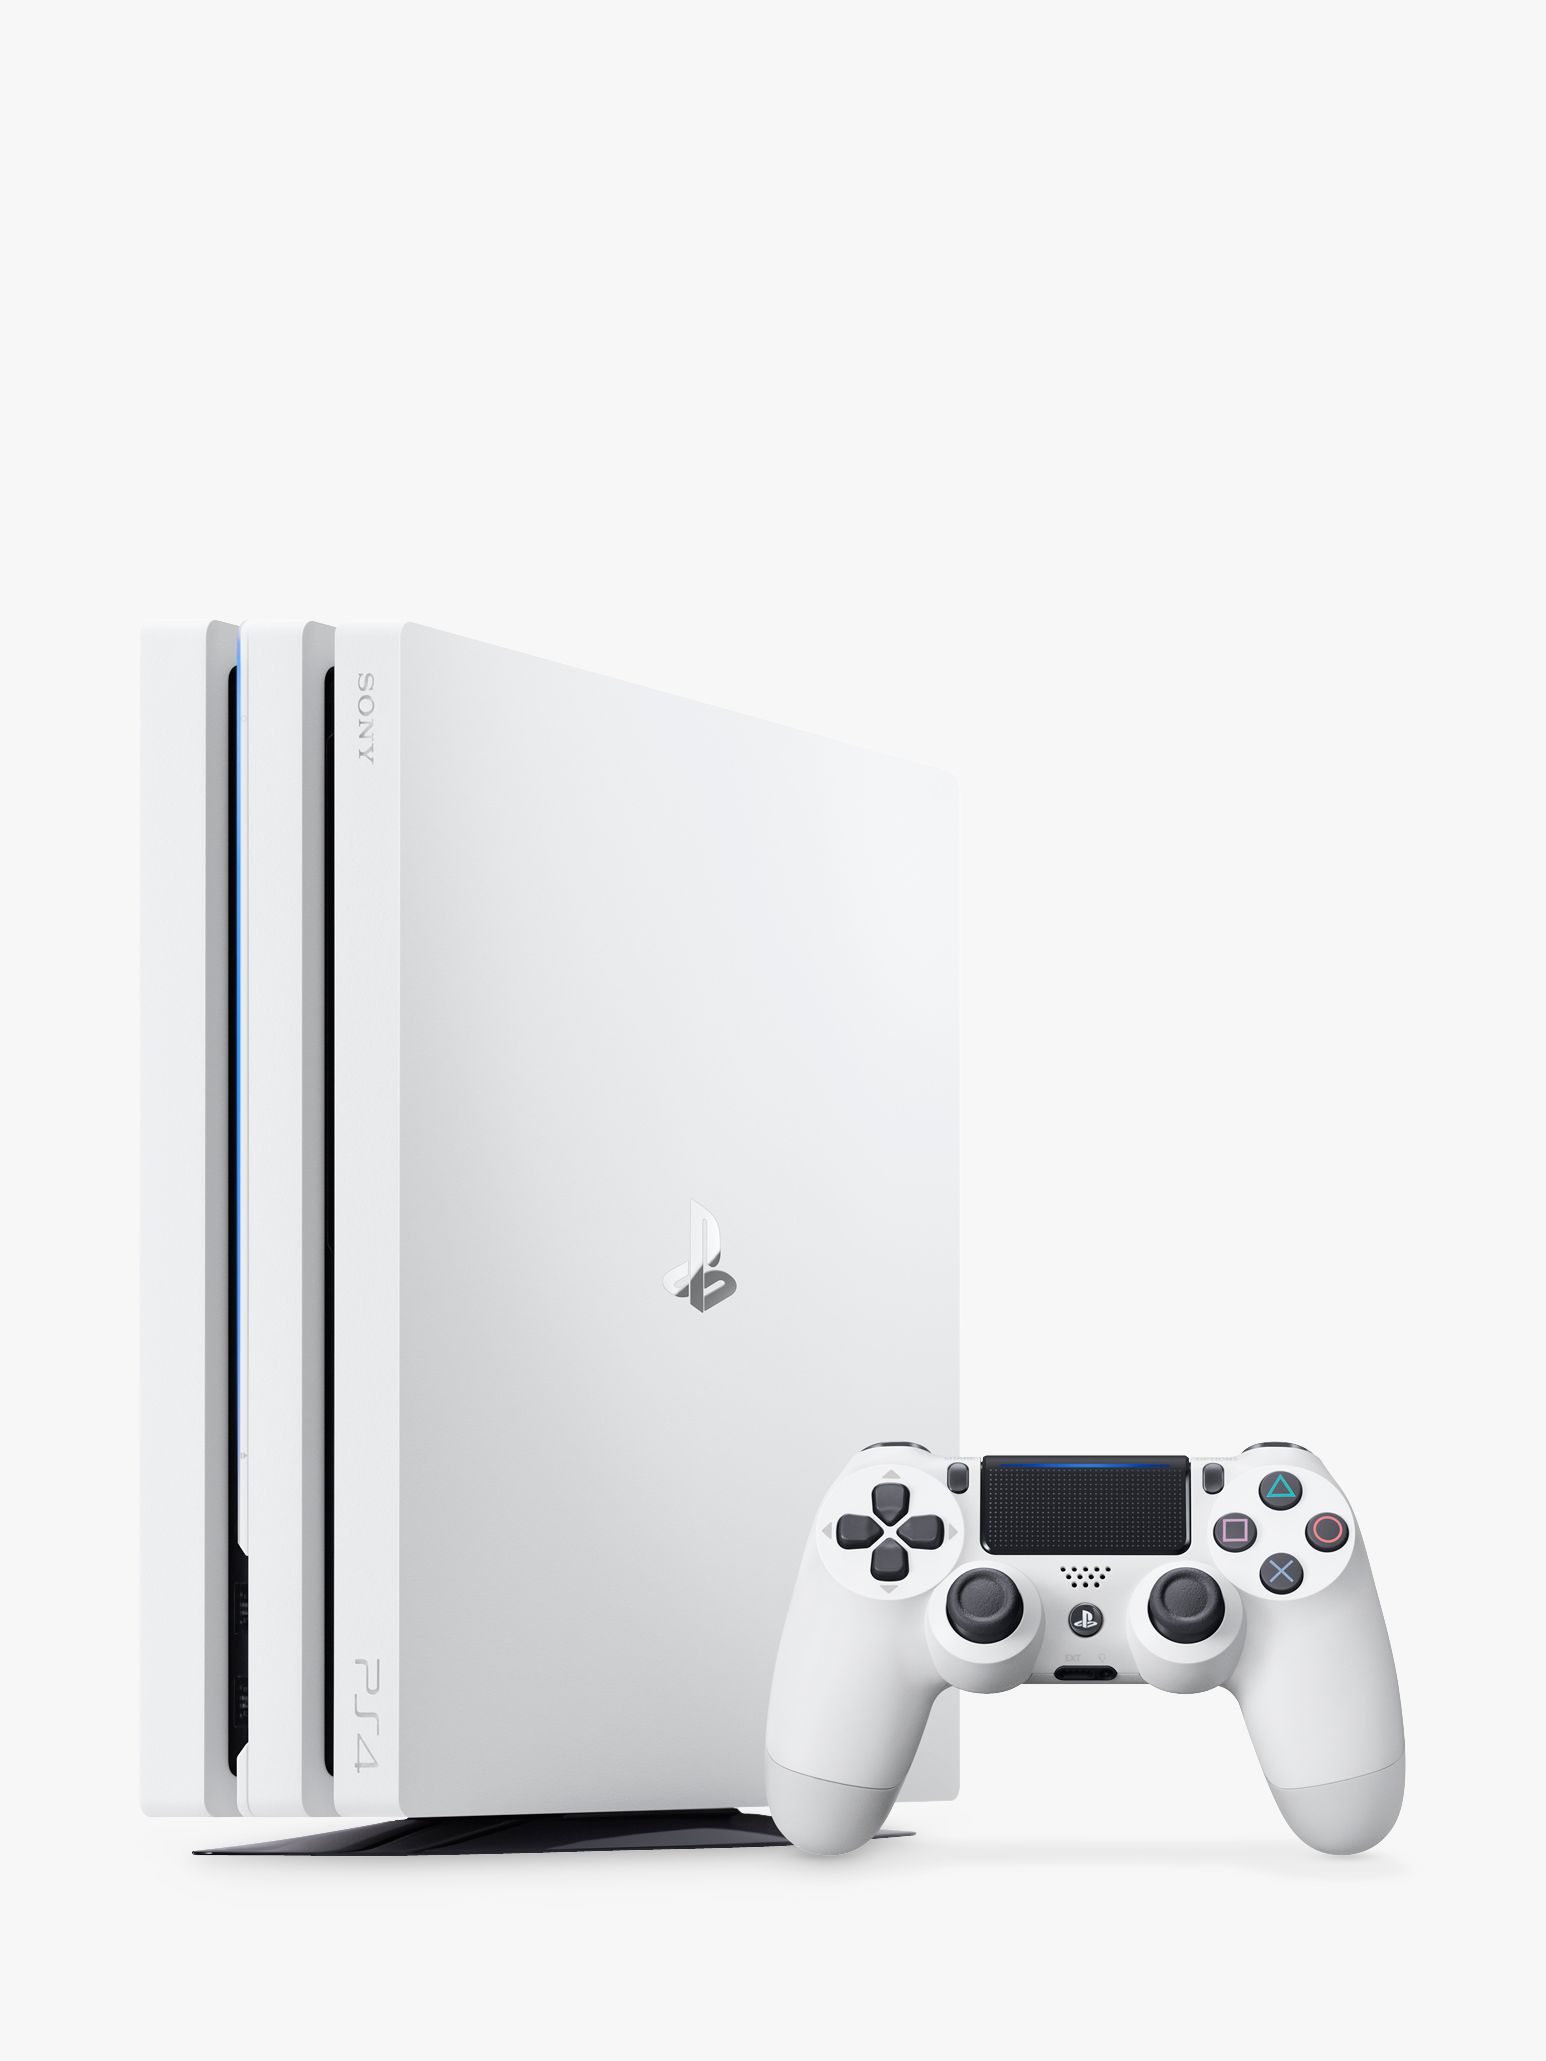 Sony PlayStation DualShock 4 Controller - Glacier White